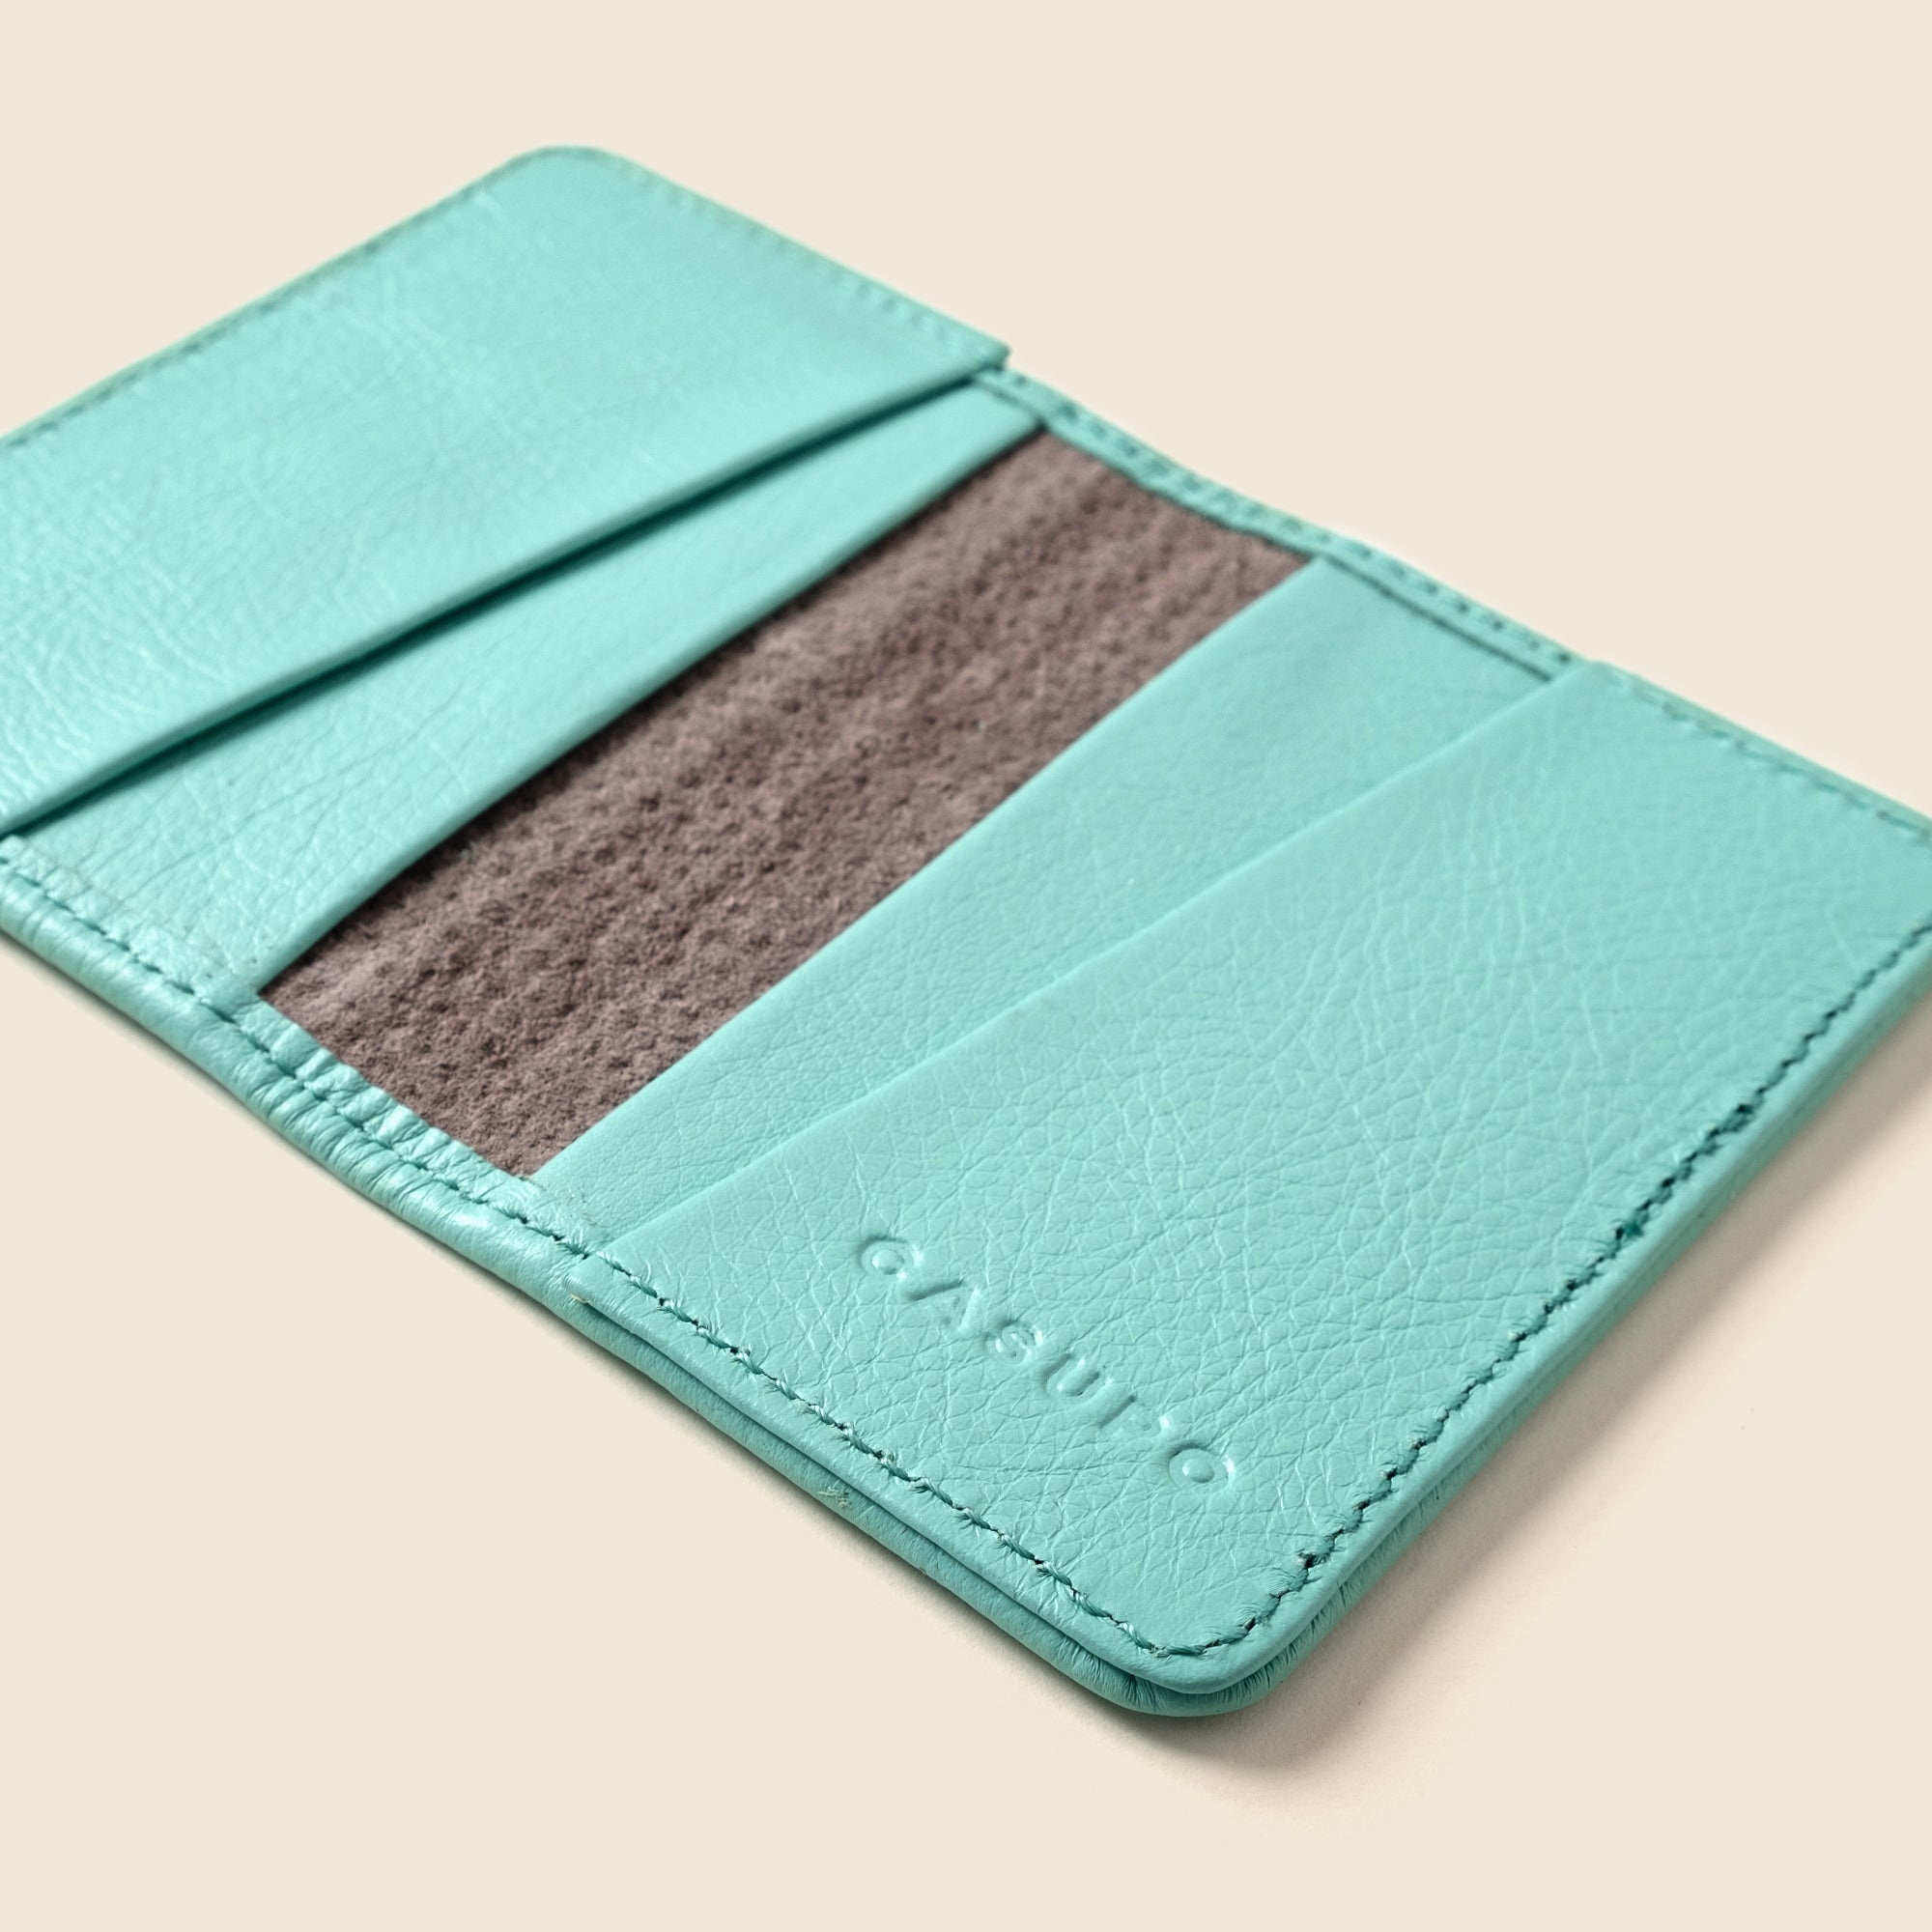 Light blue leather bifold wallet for men